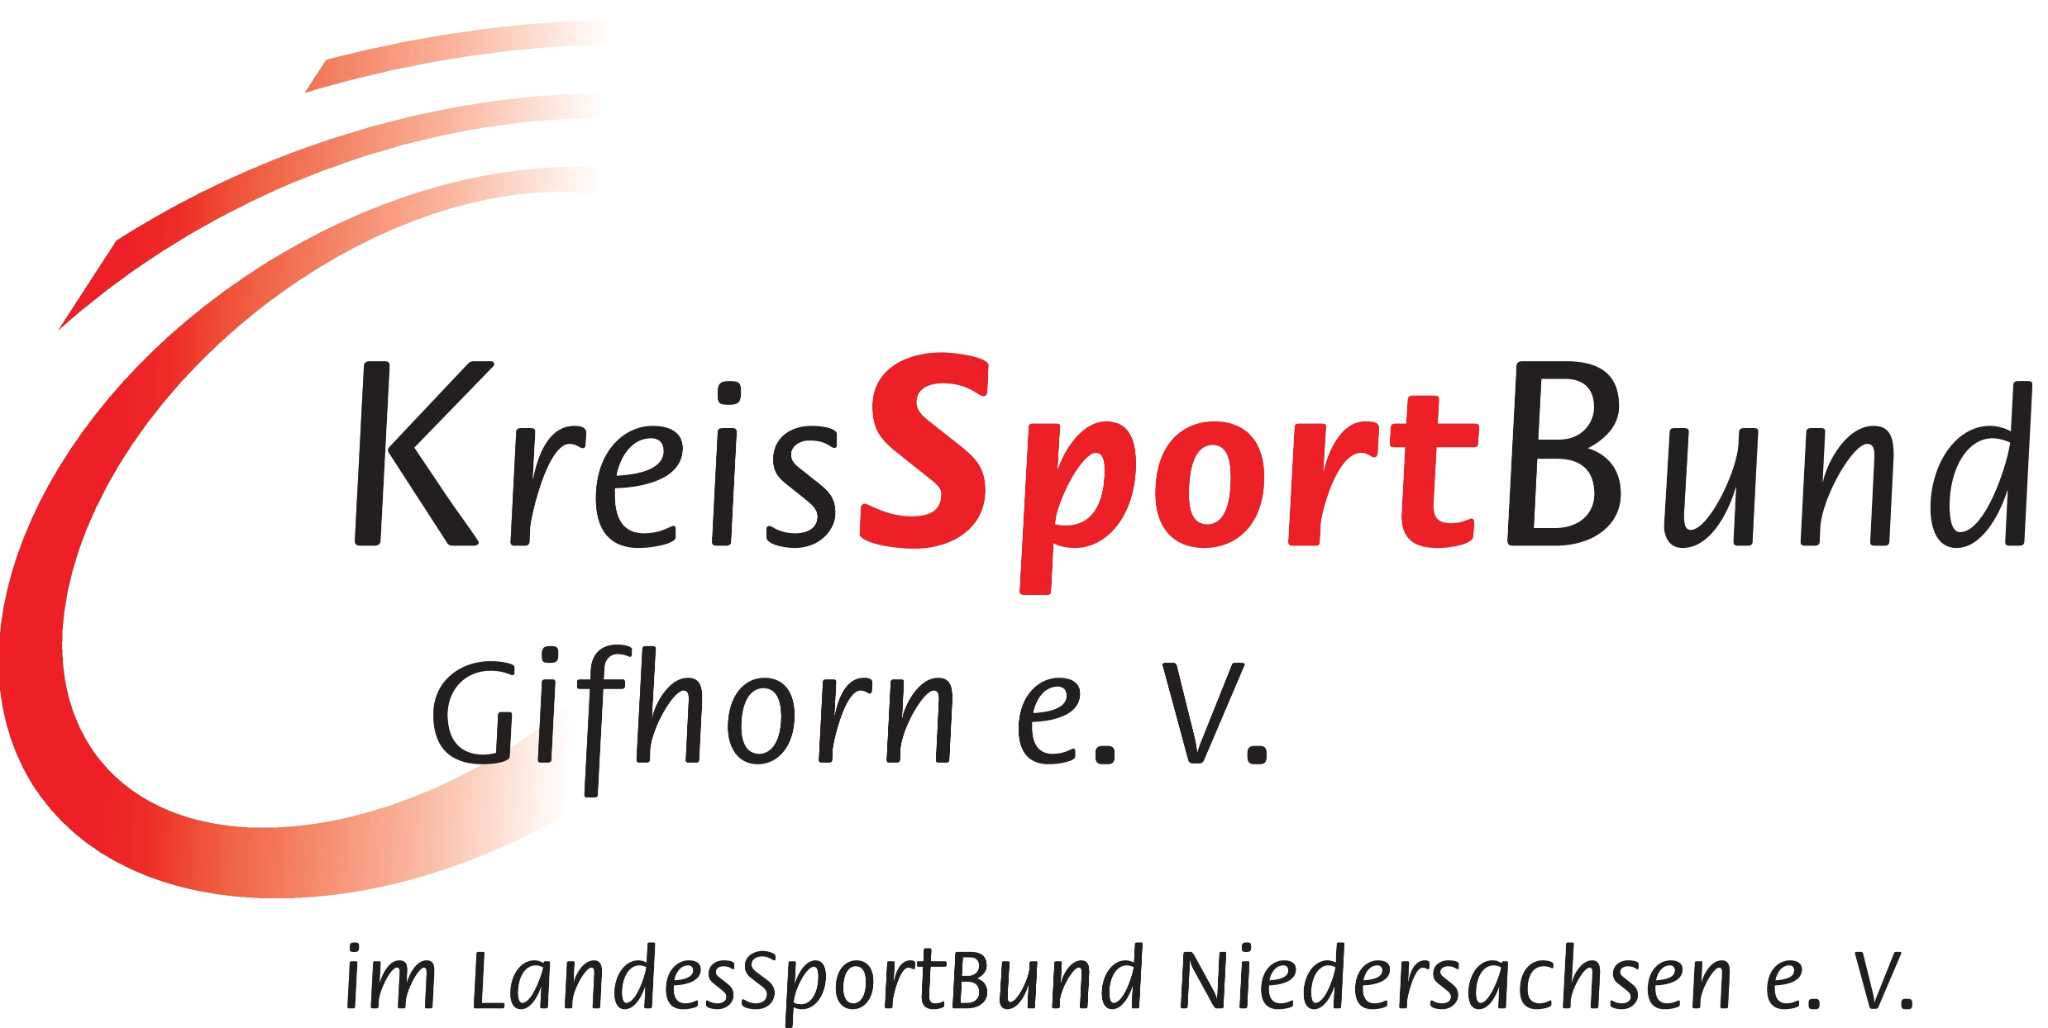 KreisSportBund Gifhorn e.V.